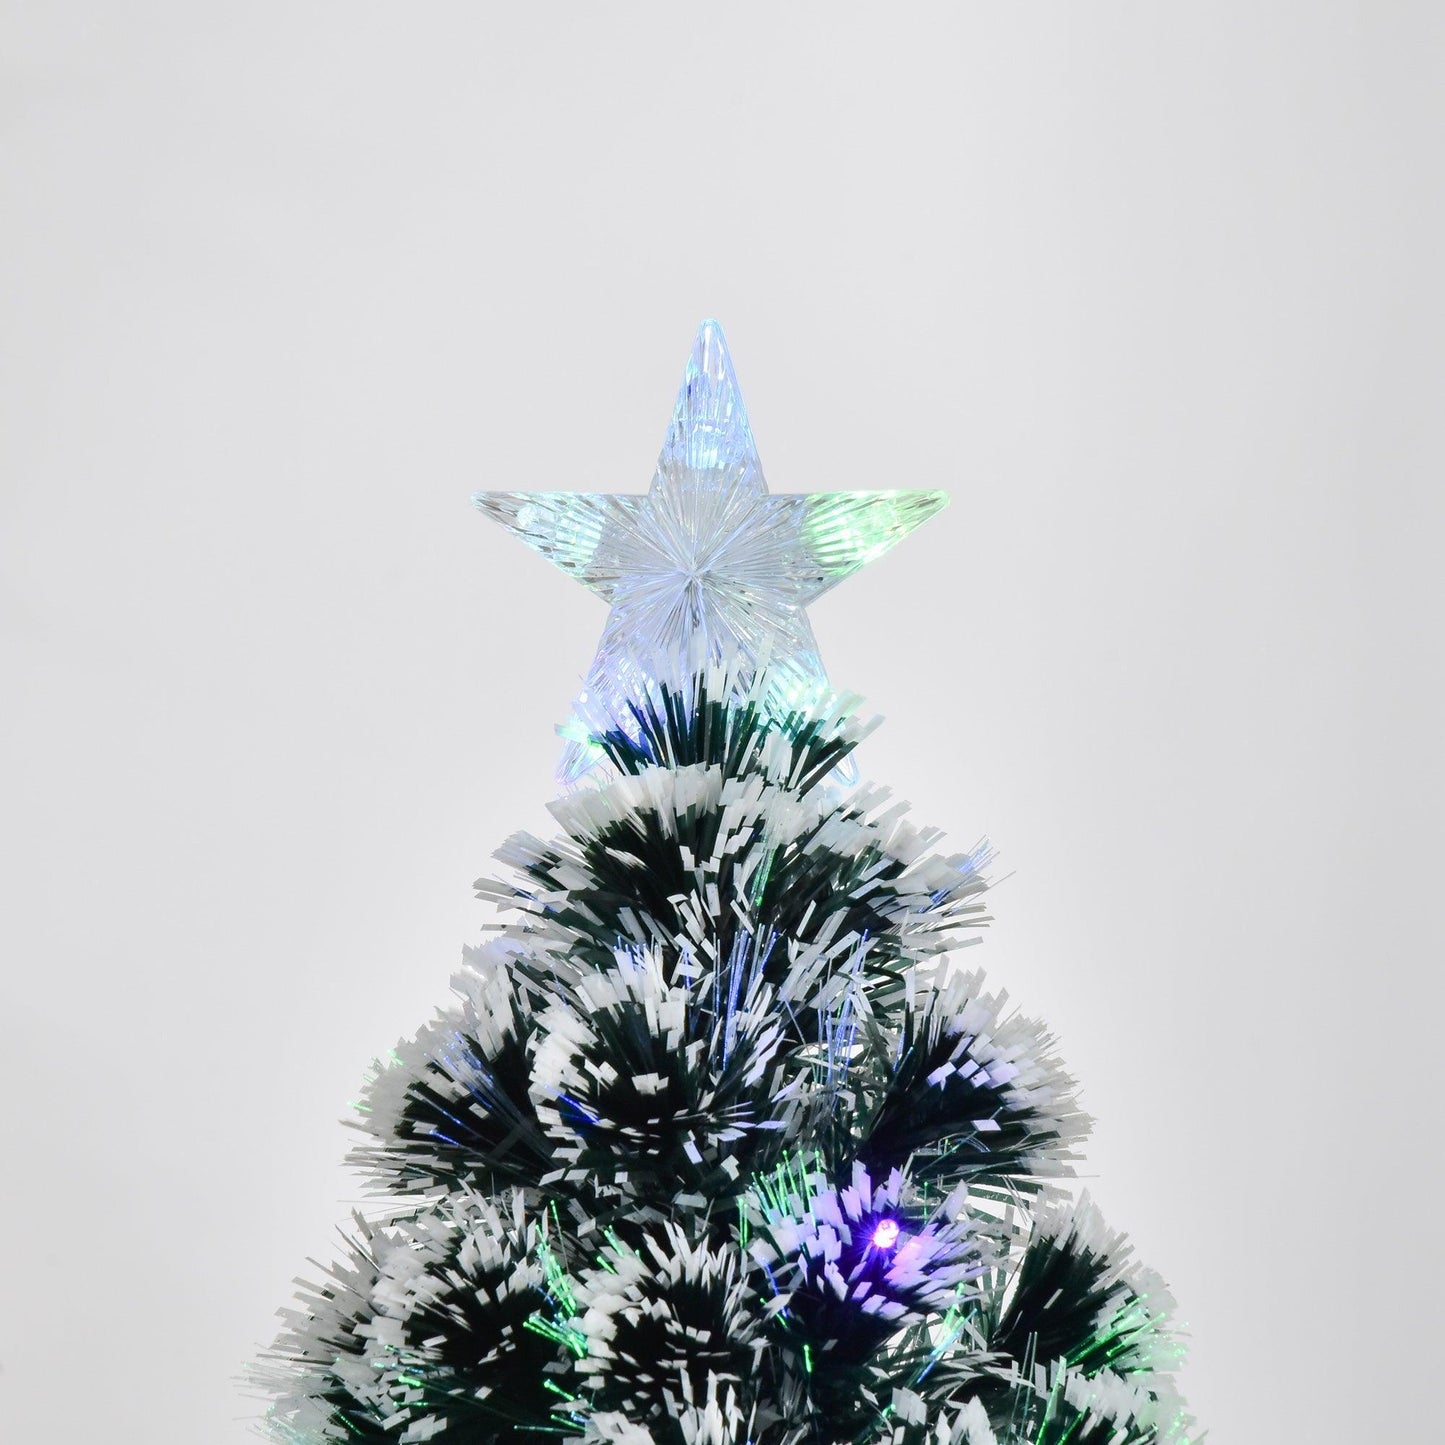 HOMCOM 4ft Green/White Christmas Tree with Prelit LEDs - ALL4U RETAILER LTD